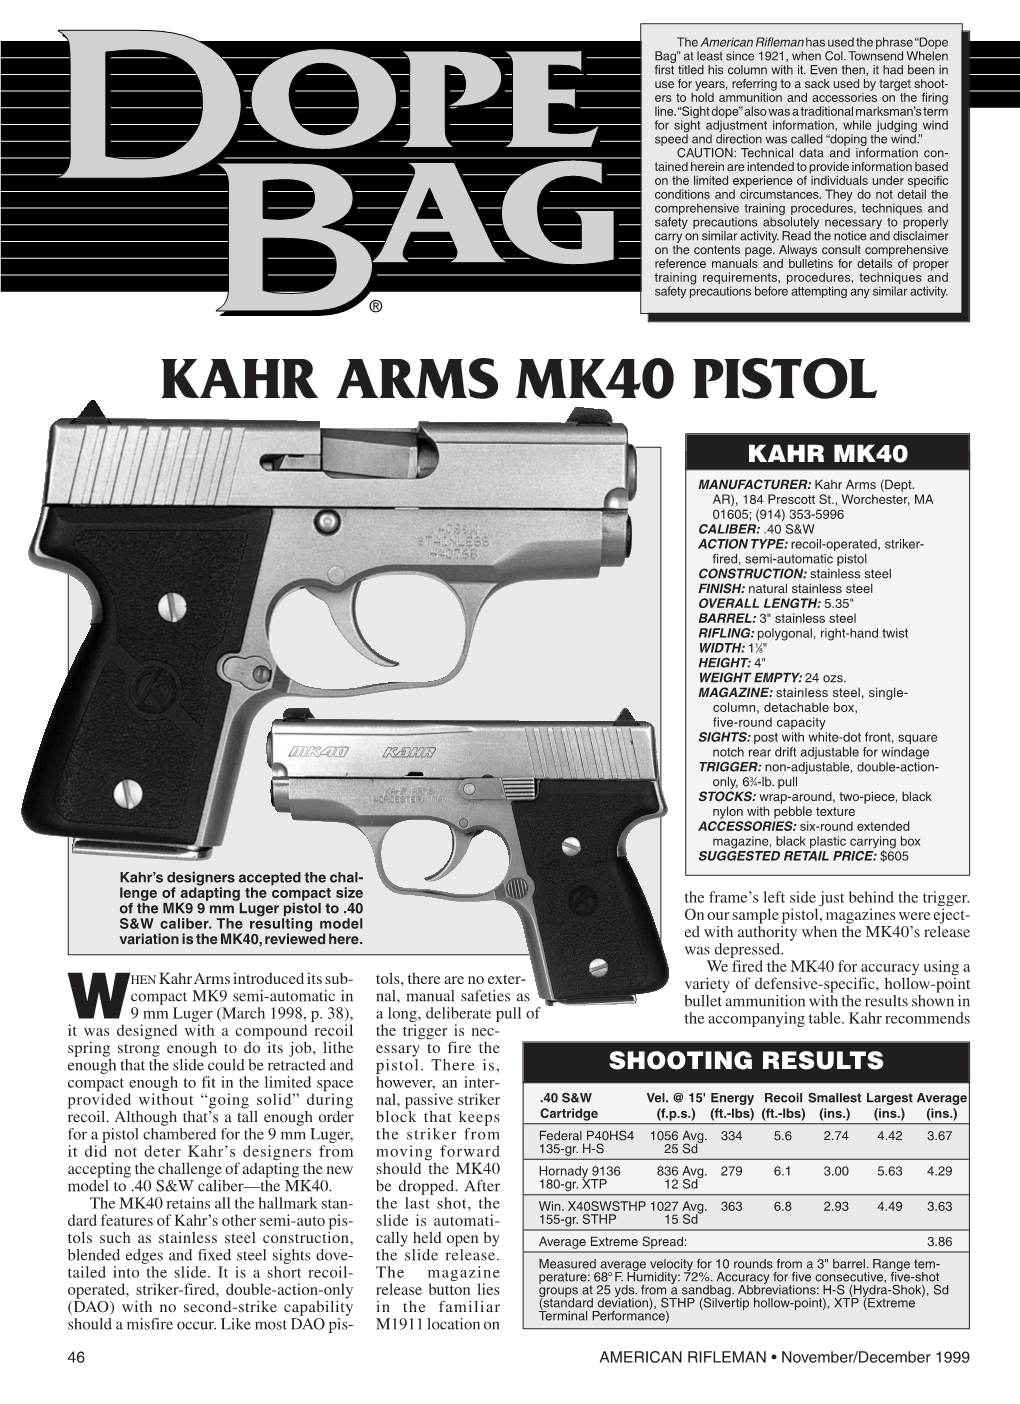 Kahr Arms Mk40 Pistol